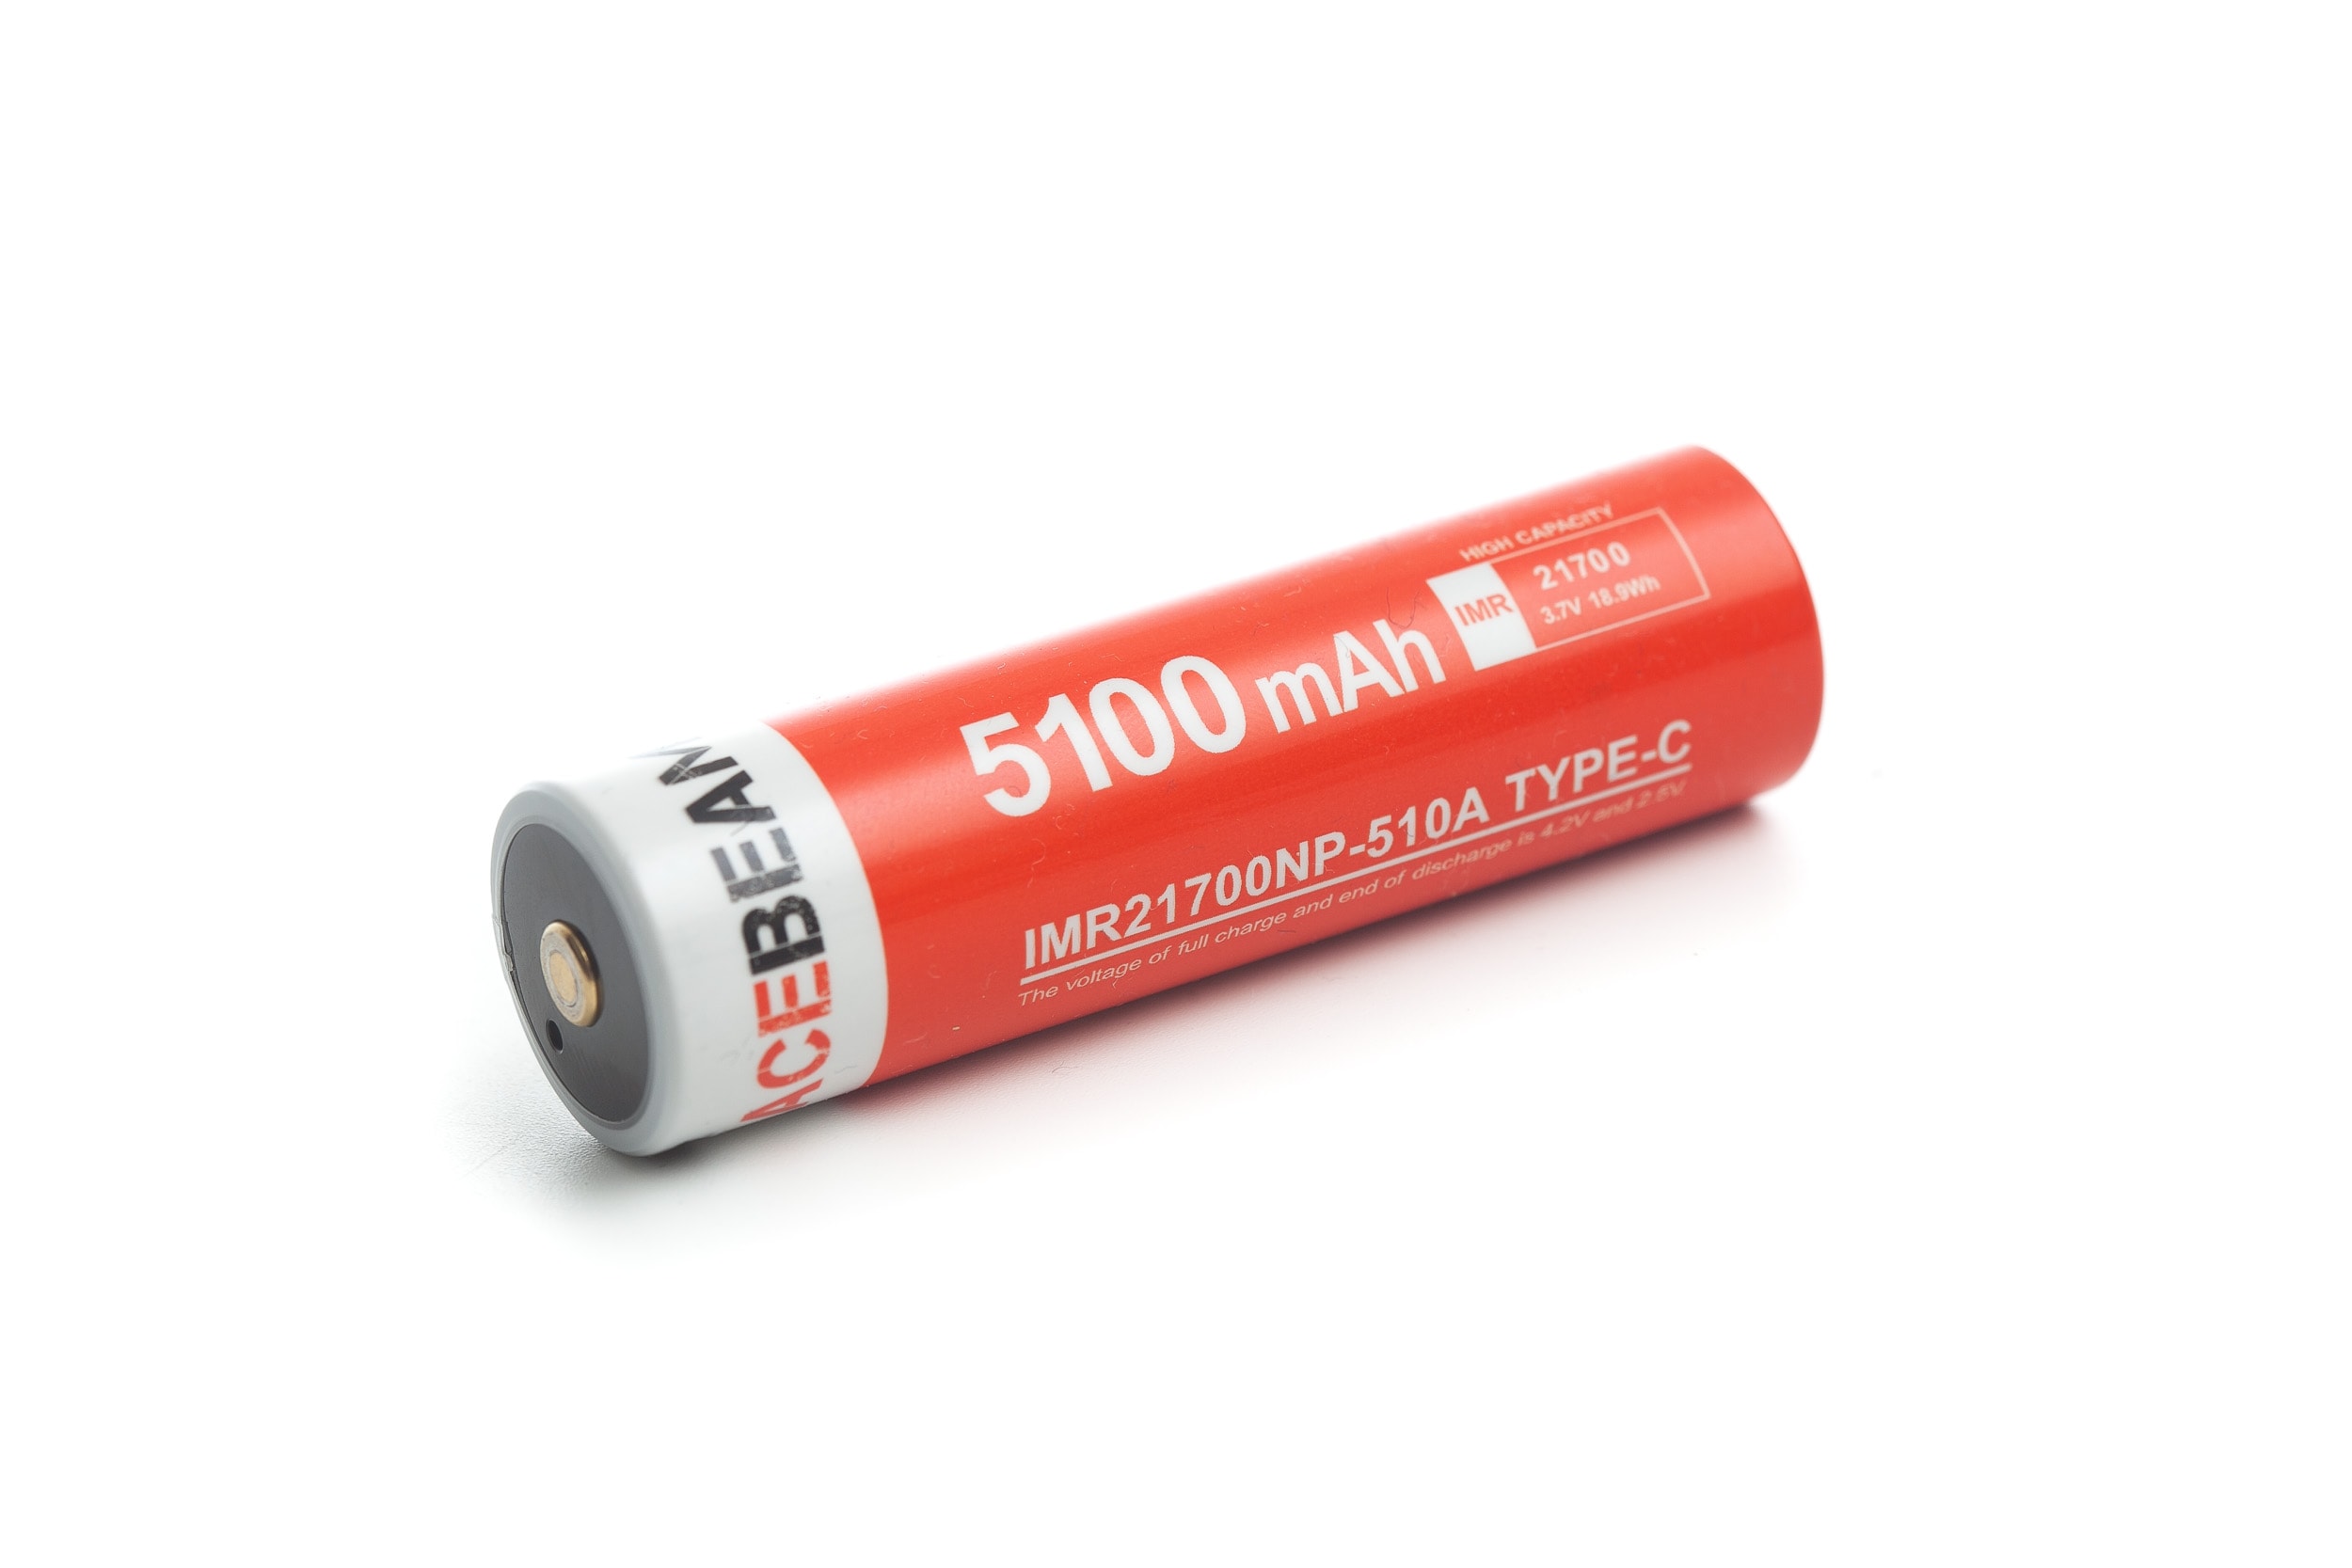 acebeam battery imr21700np 510a 1